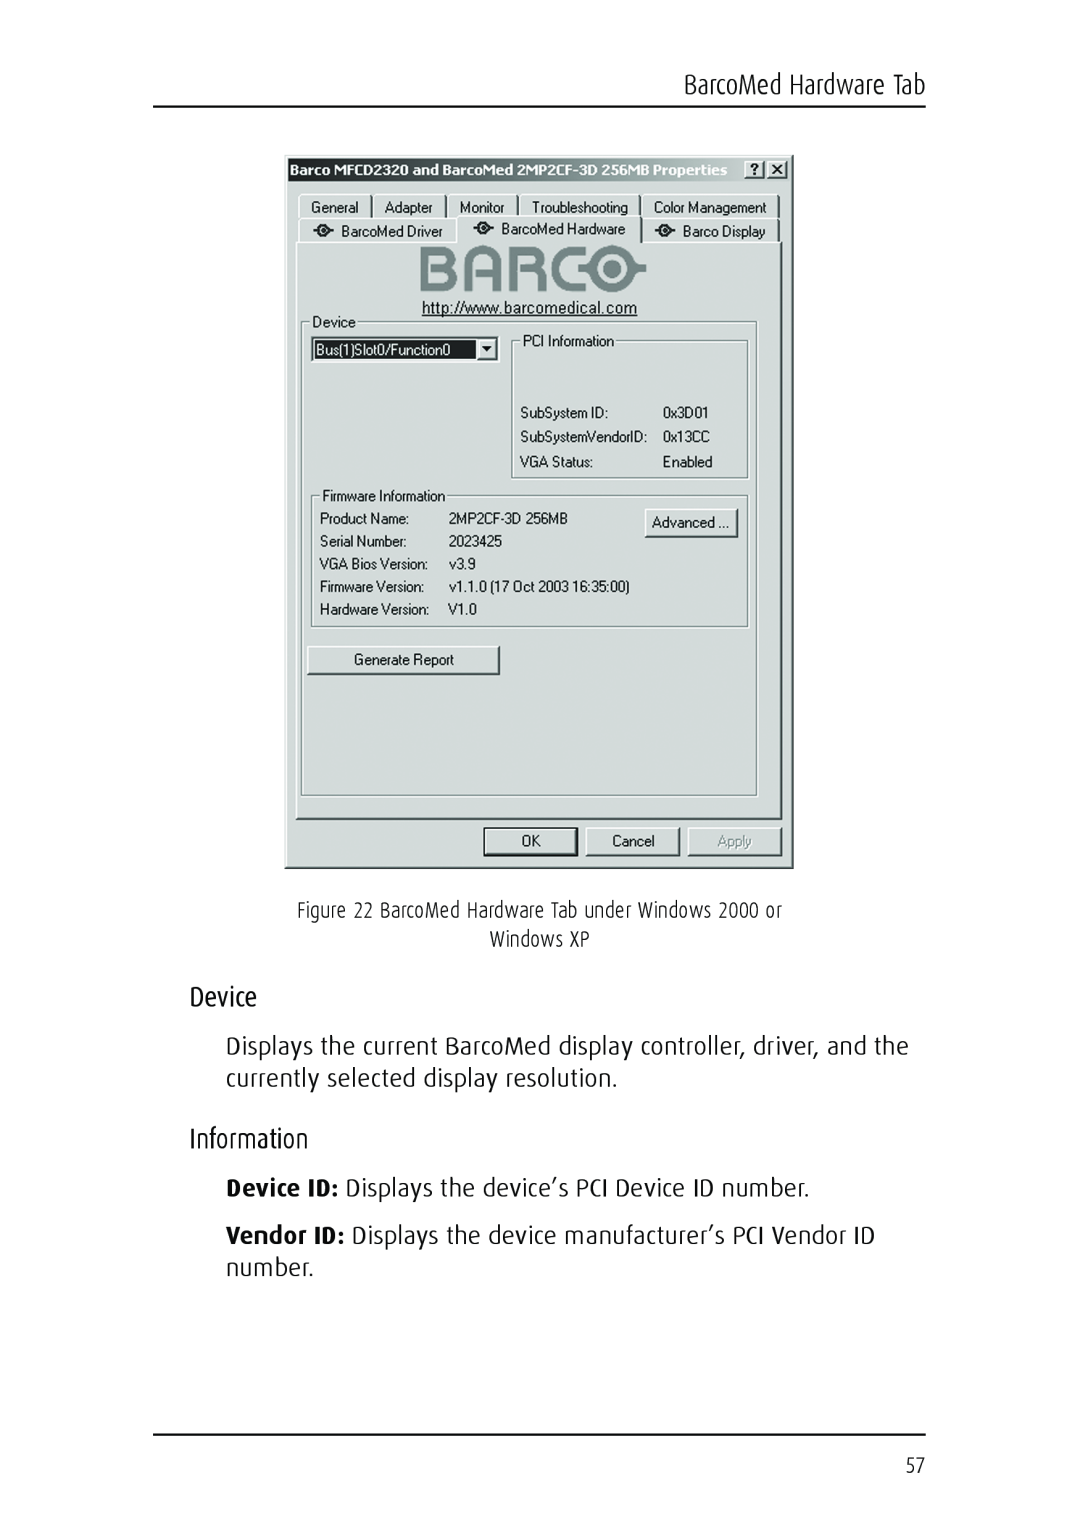 Barco MGP 15 user manual Device, Information, BarcoMed Hardware Tab, Windows XP 